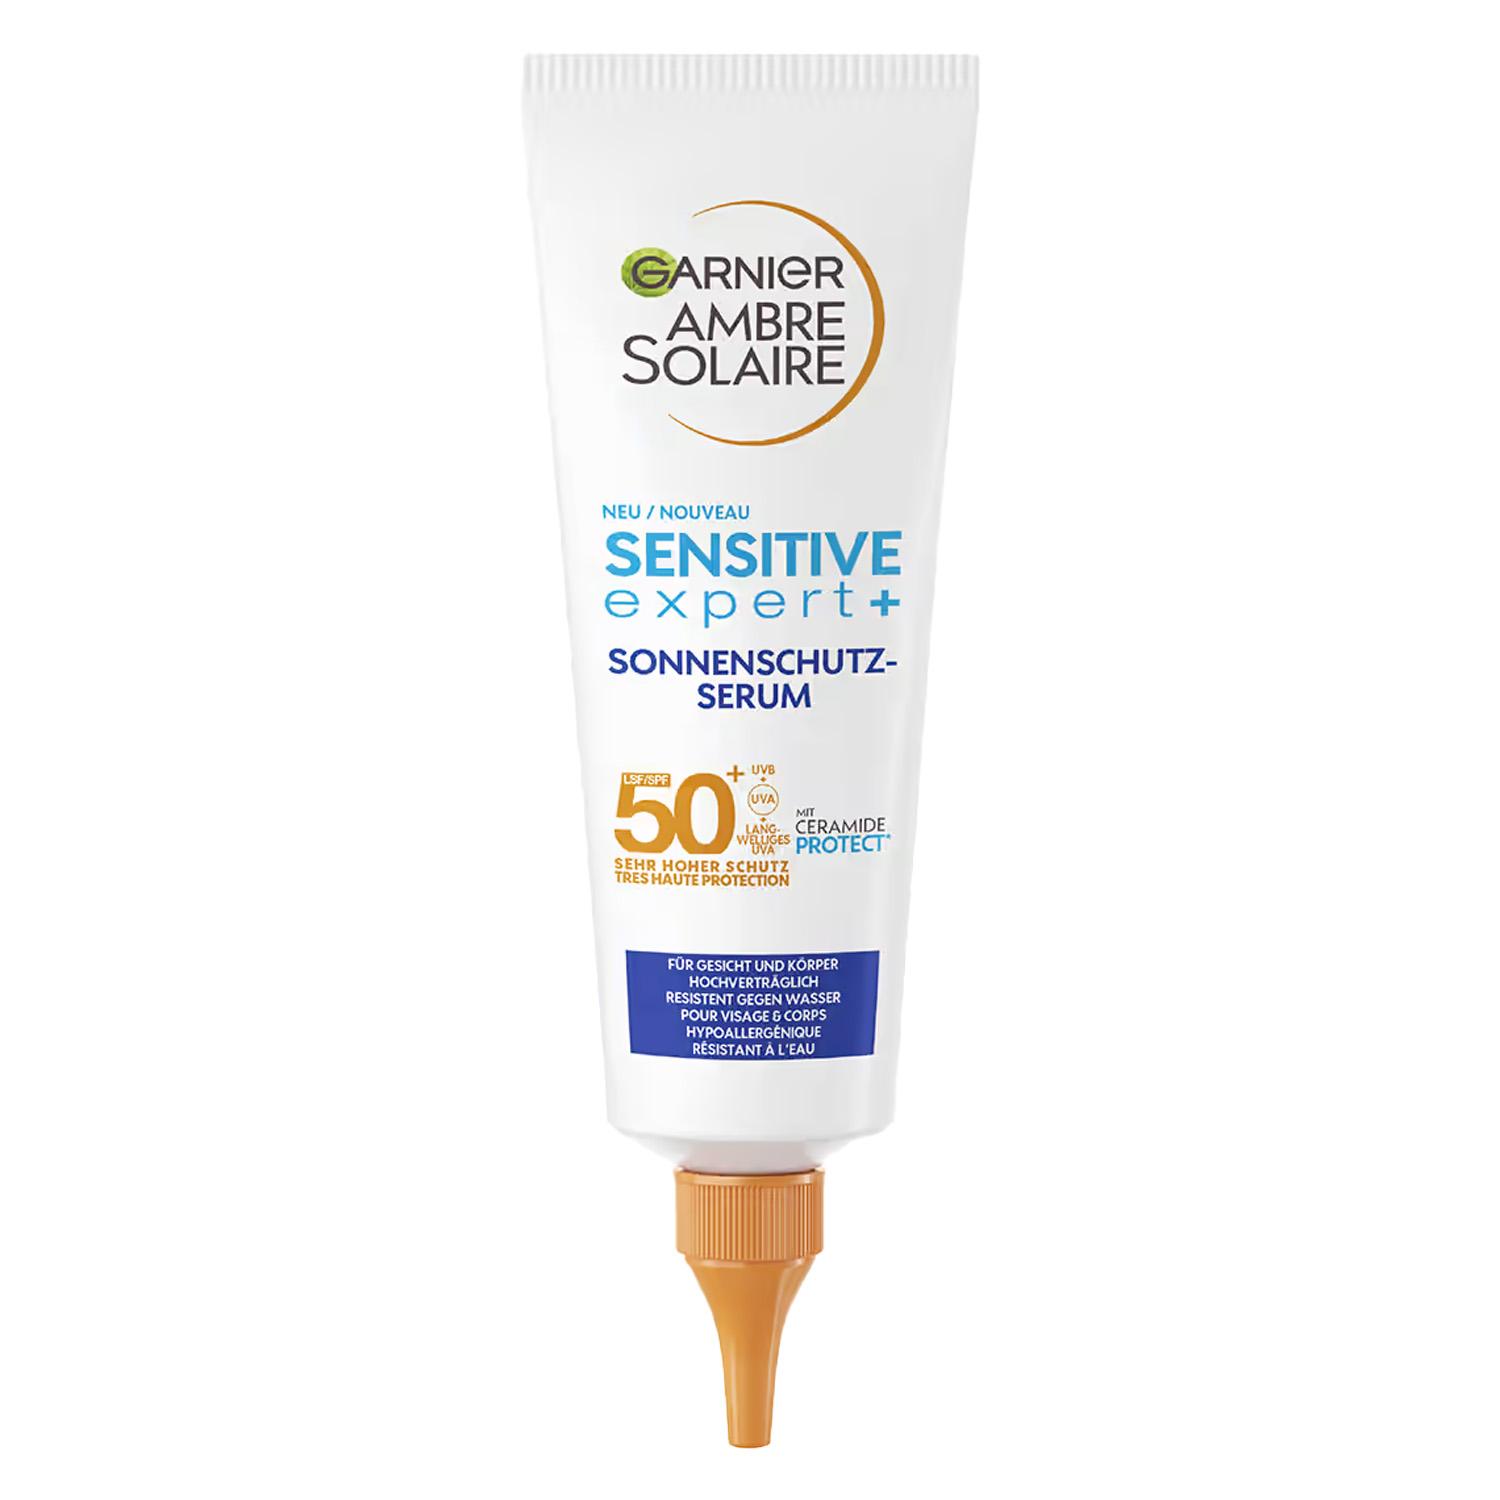 Ambre Solaire - Sensitive expert+ Sonnenschutz-Serum LSF 50+